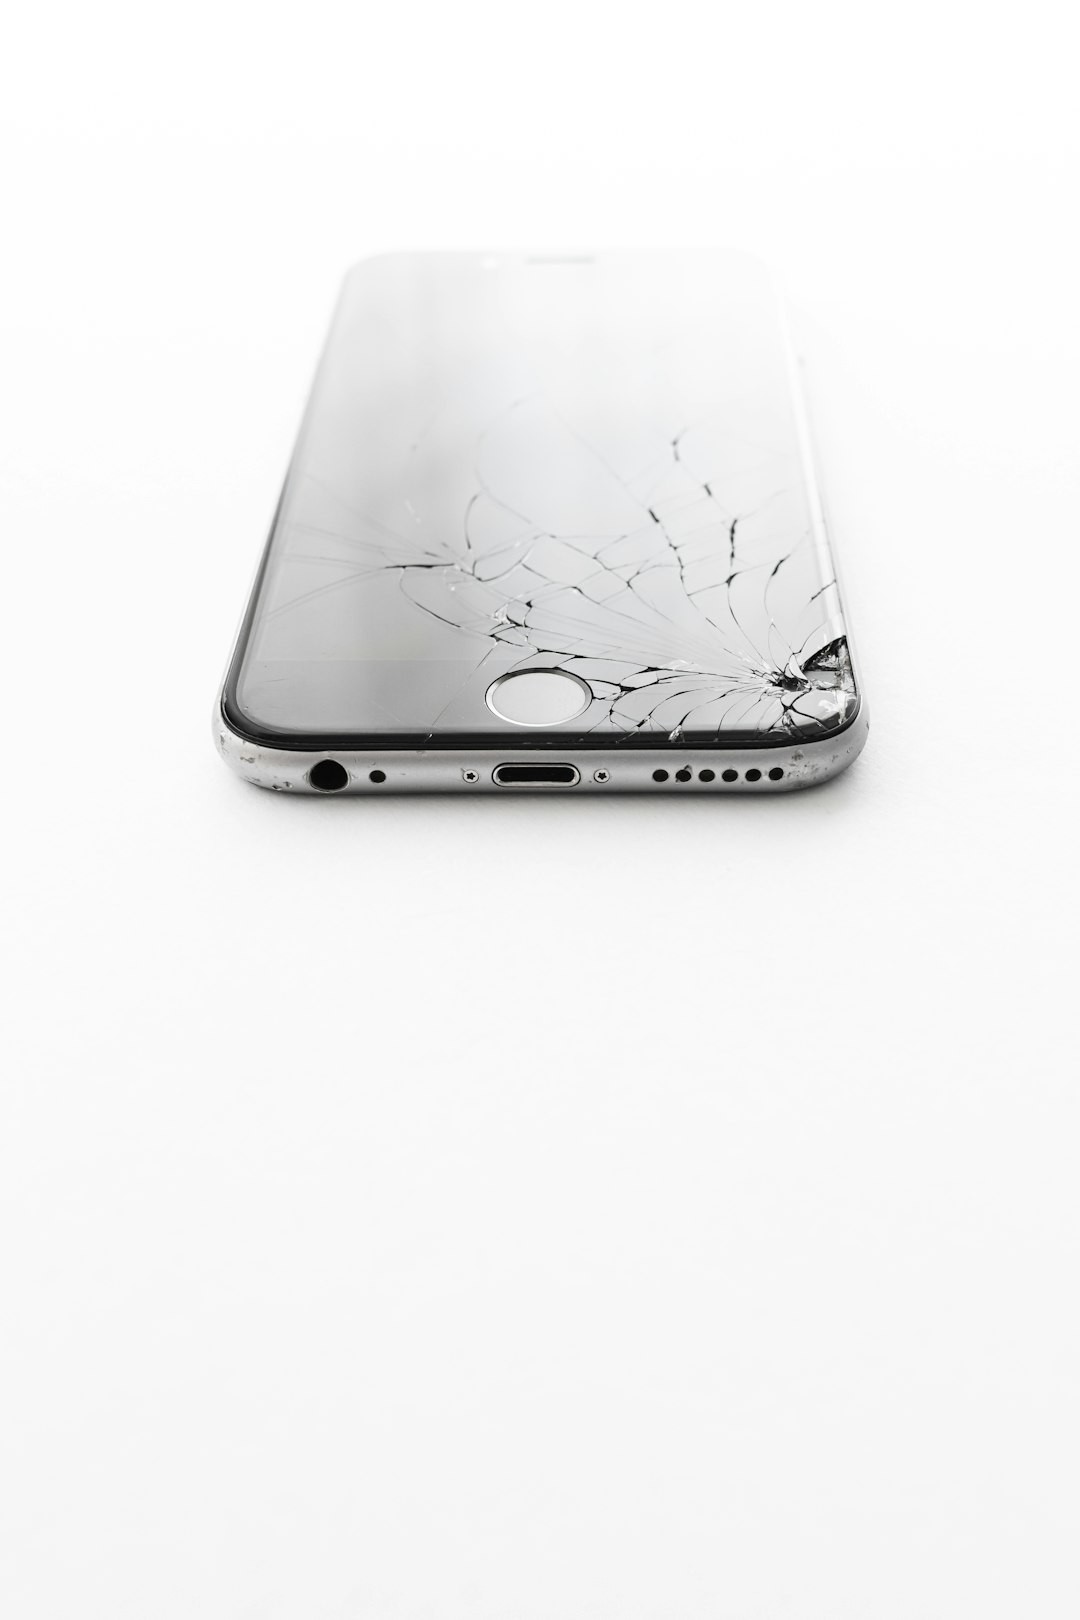 minimal image of broken iPhone glass